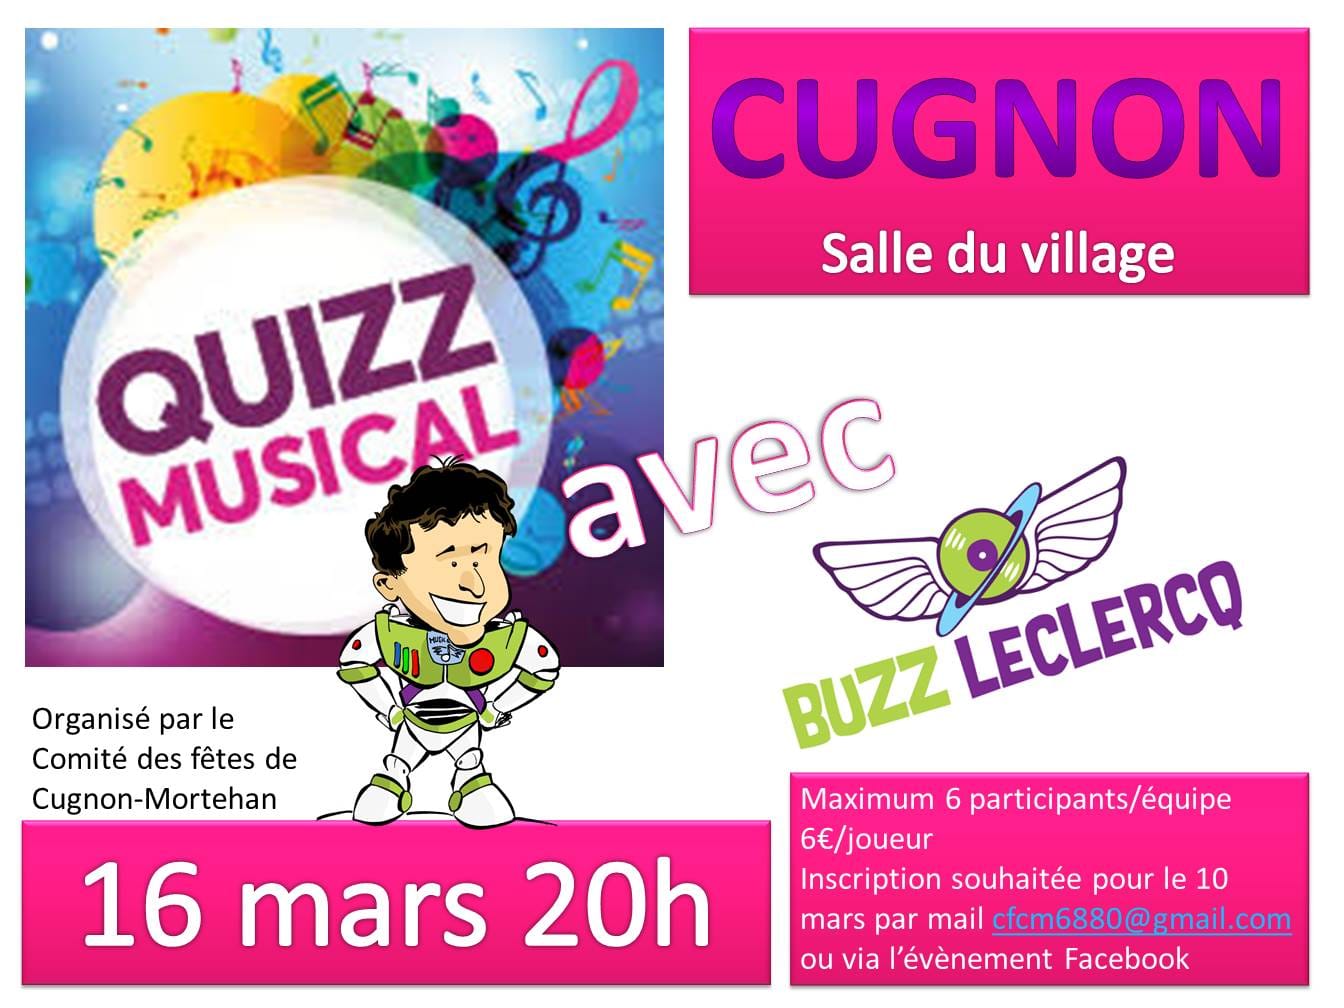 Quizz Musical Avec Buzz Leclercq